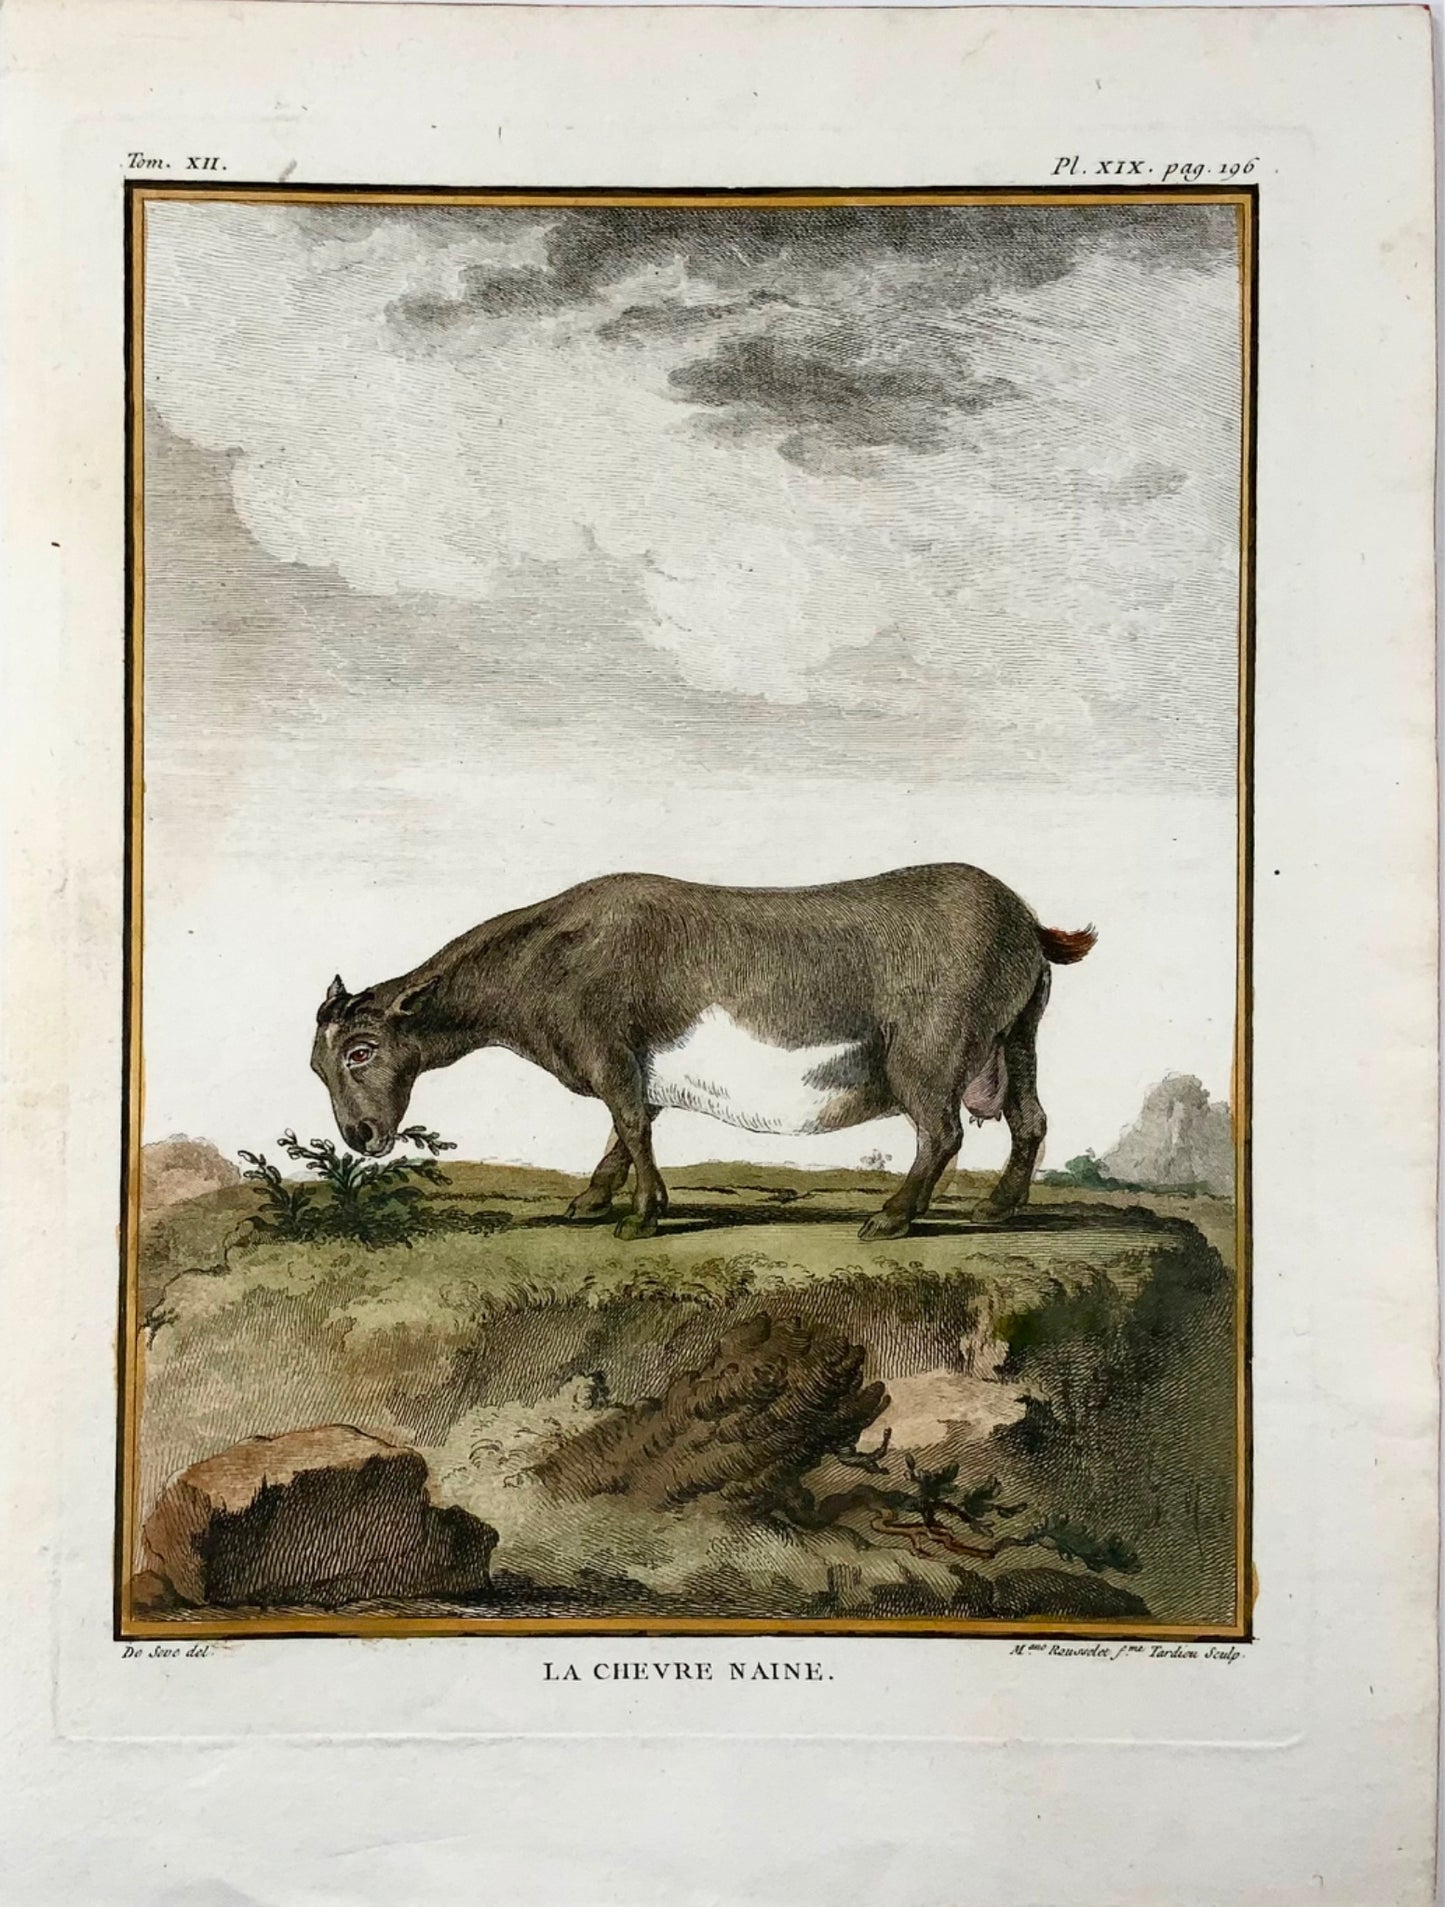 1779 Chèvre pygmée ; J. de Sève, Mammifère, gravure in-4